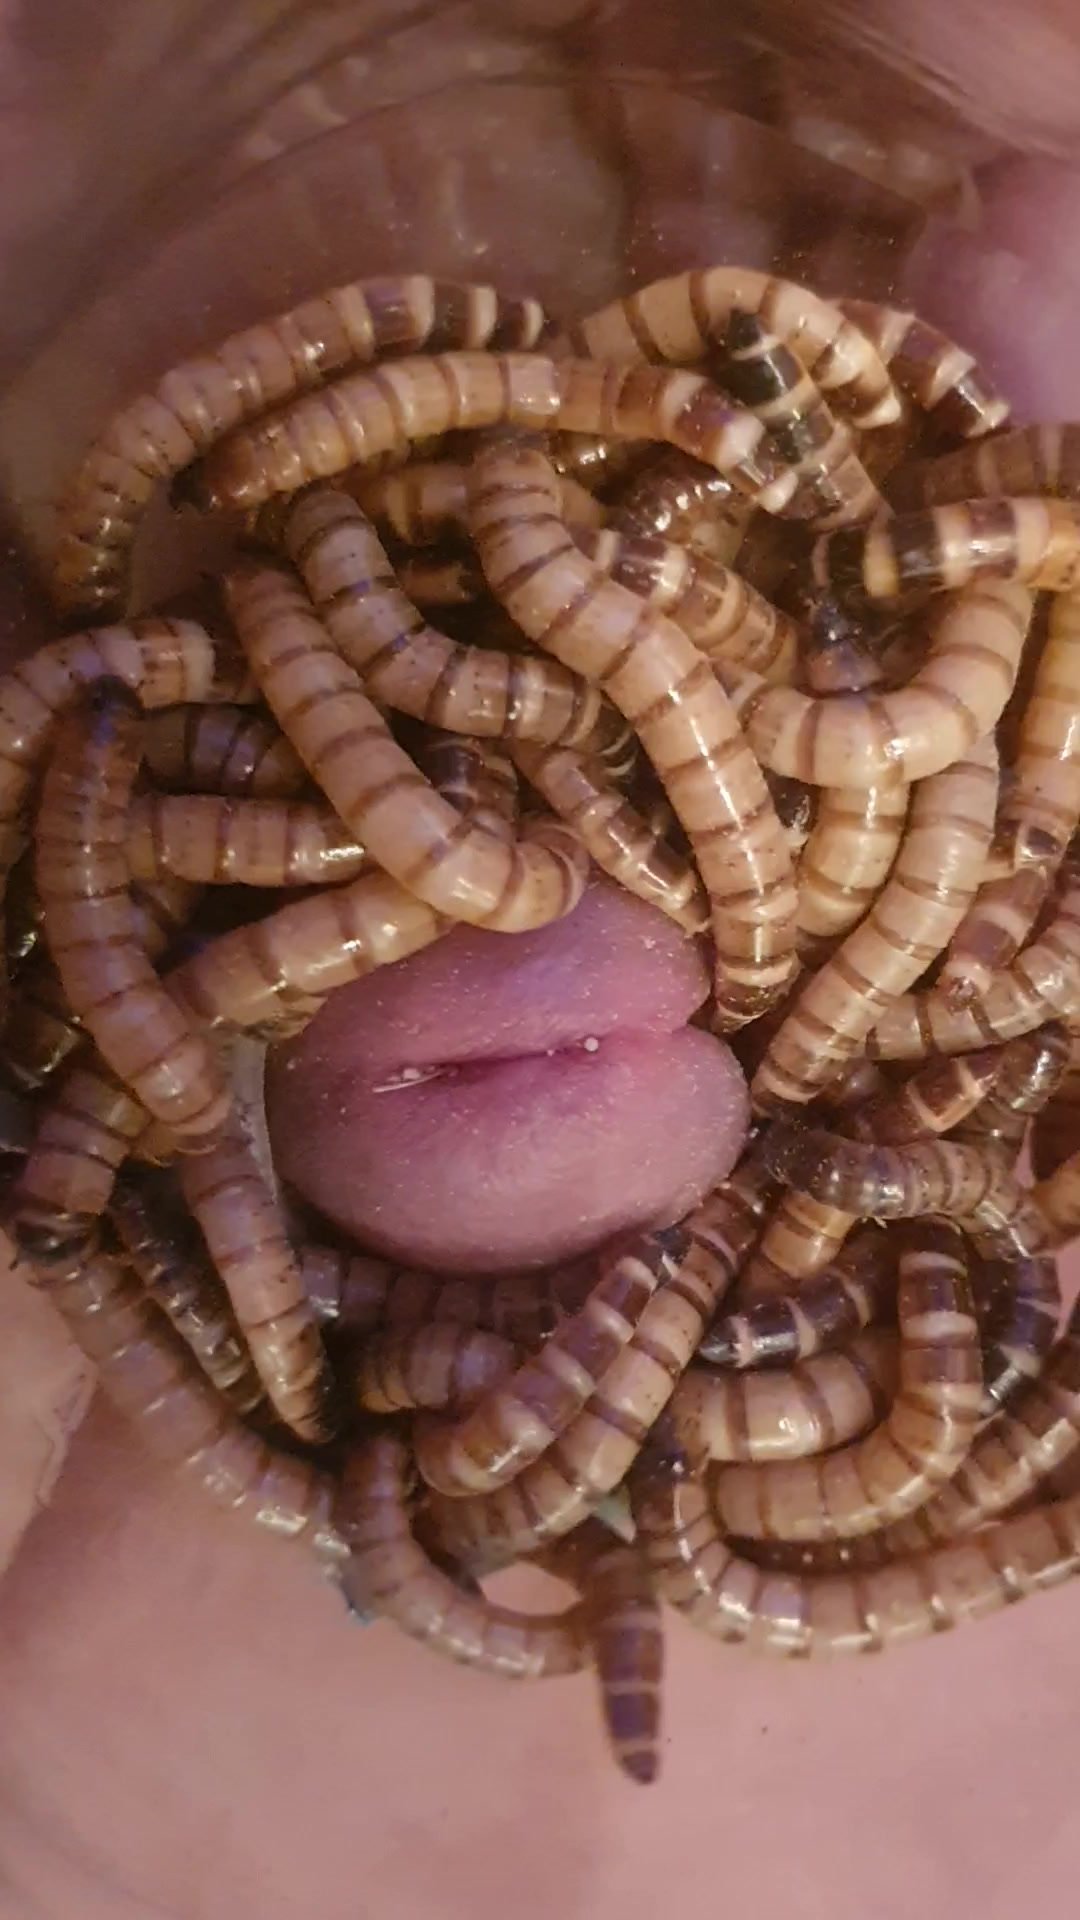 Worms bite